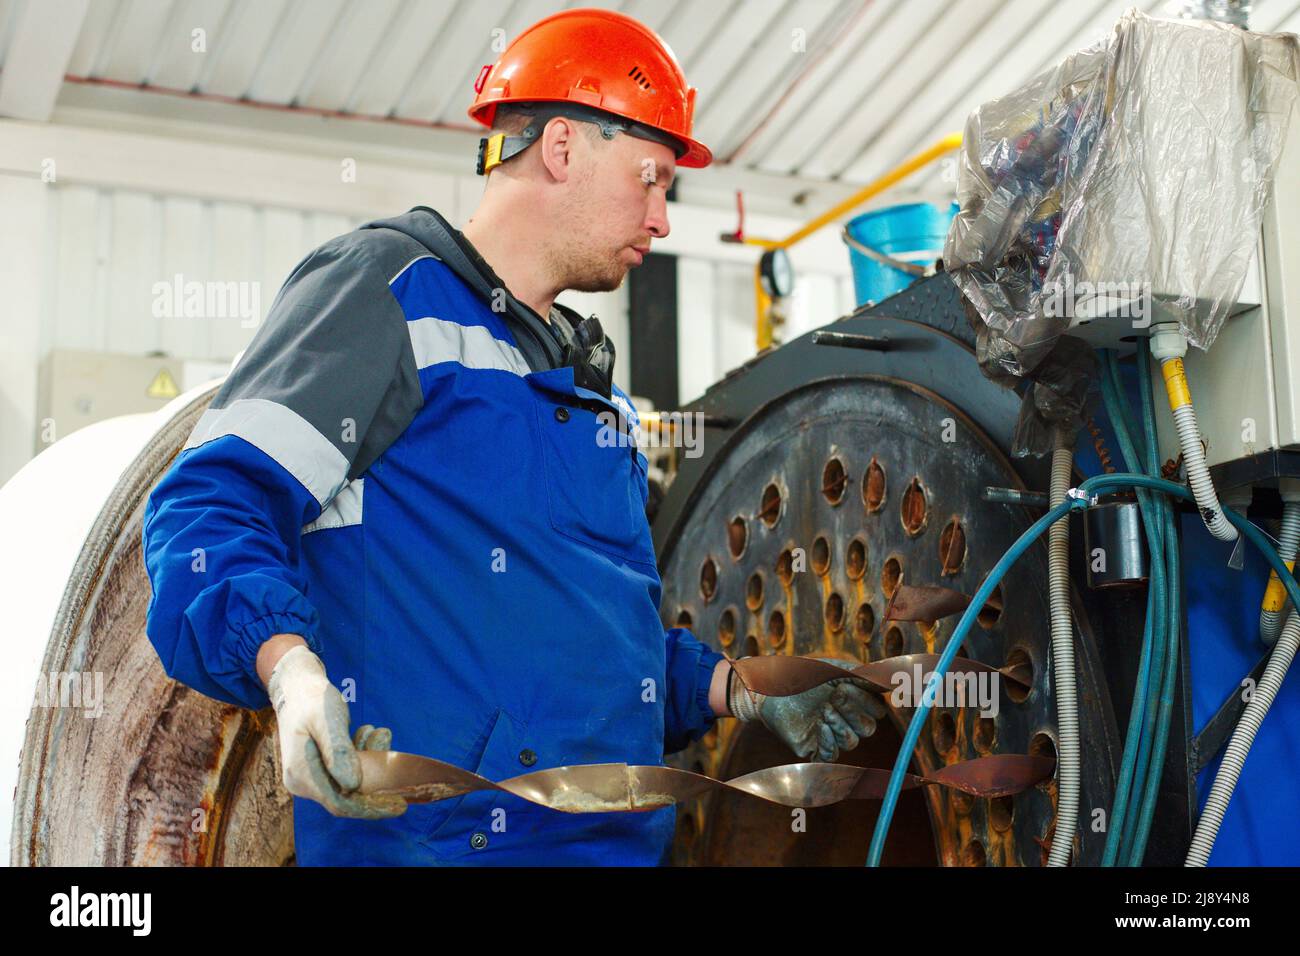 L'ingegnere in casco ispeziona e ripara le apparecchiature a gas del locale caldaie. Pulizia e manutenzione di caldaie industriali a vapore. Foto Stock